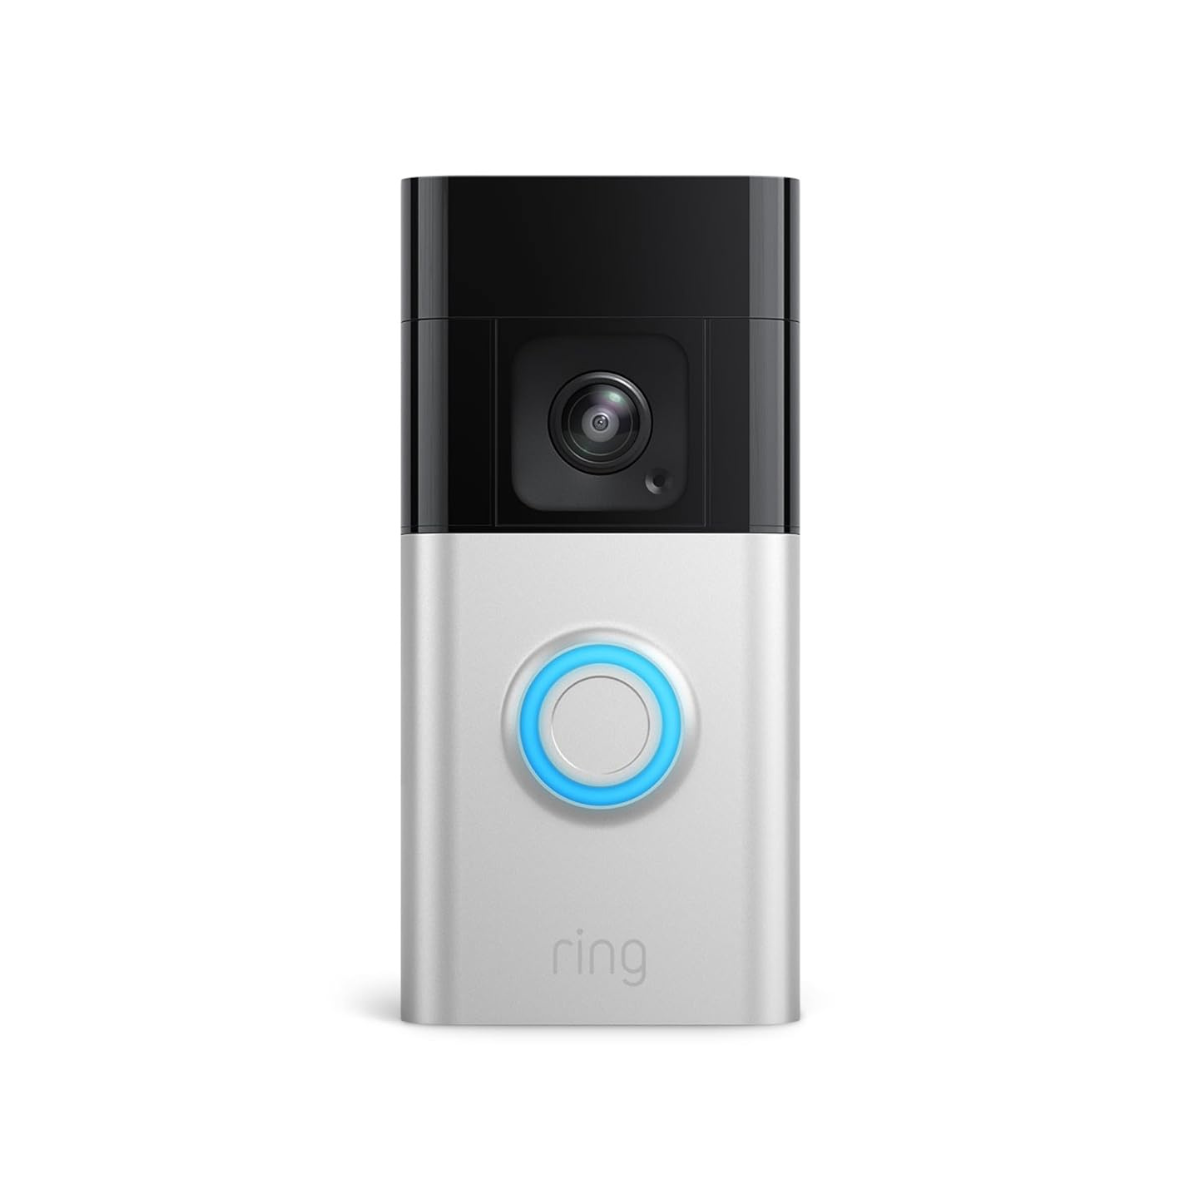 The Ring Battery Doorbell Pro